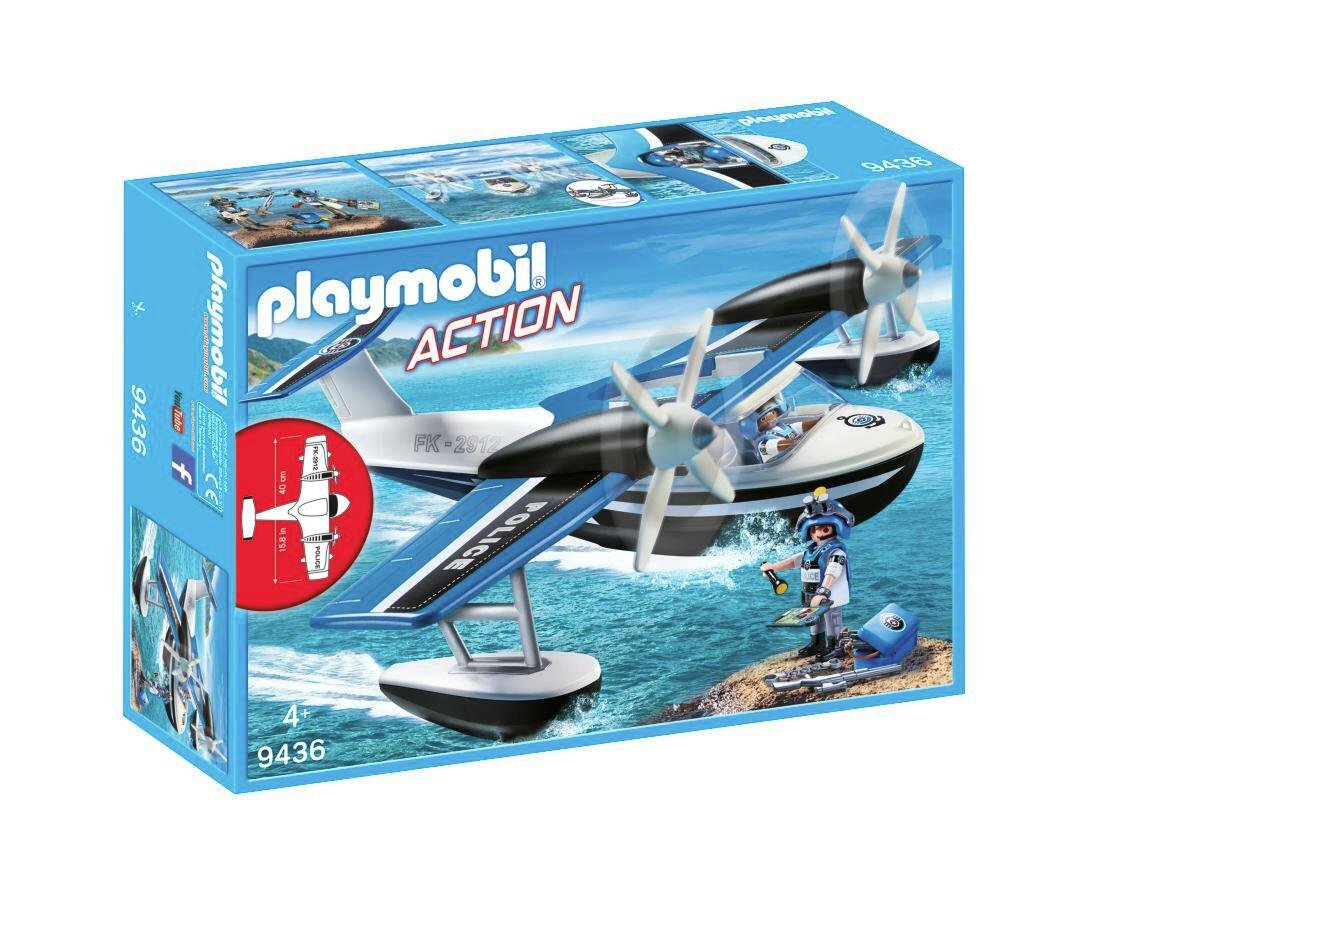 Playmobil 9436 Action Police Seaplane